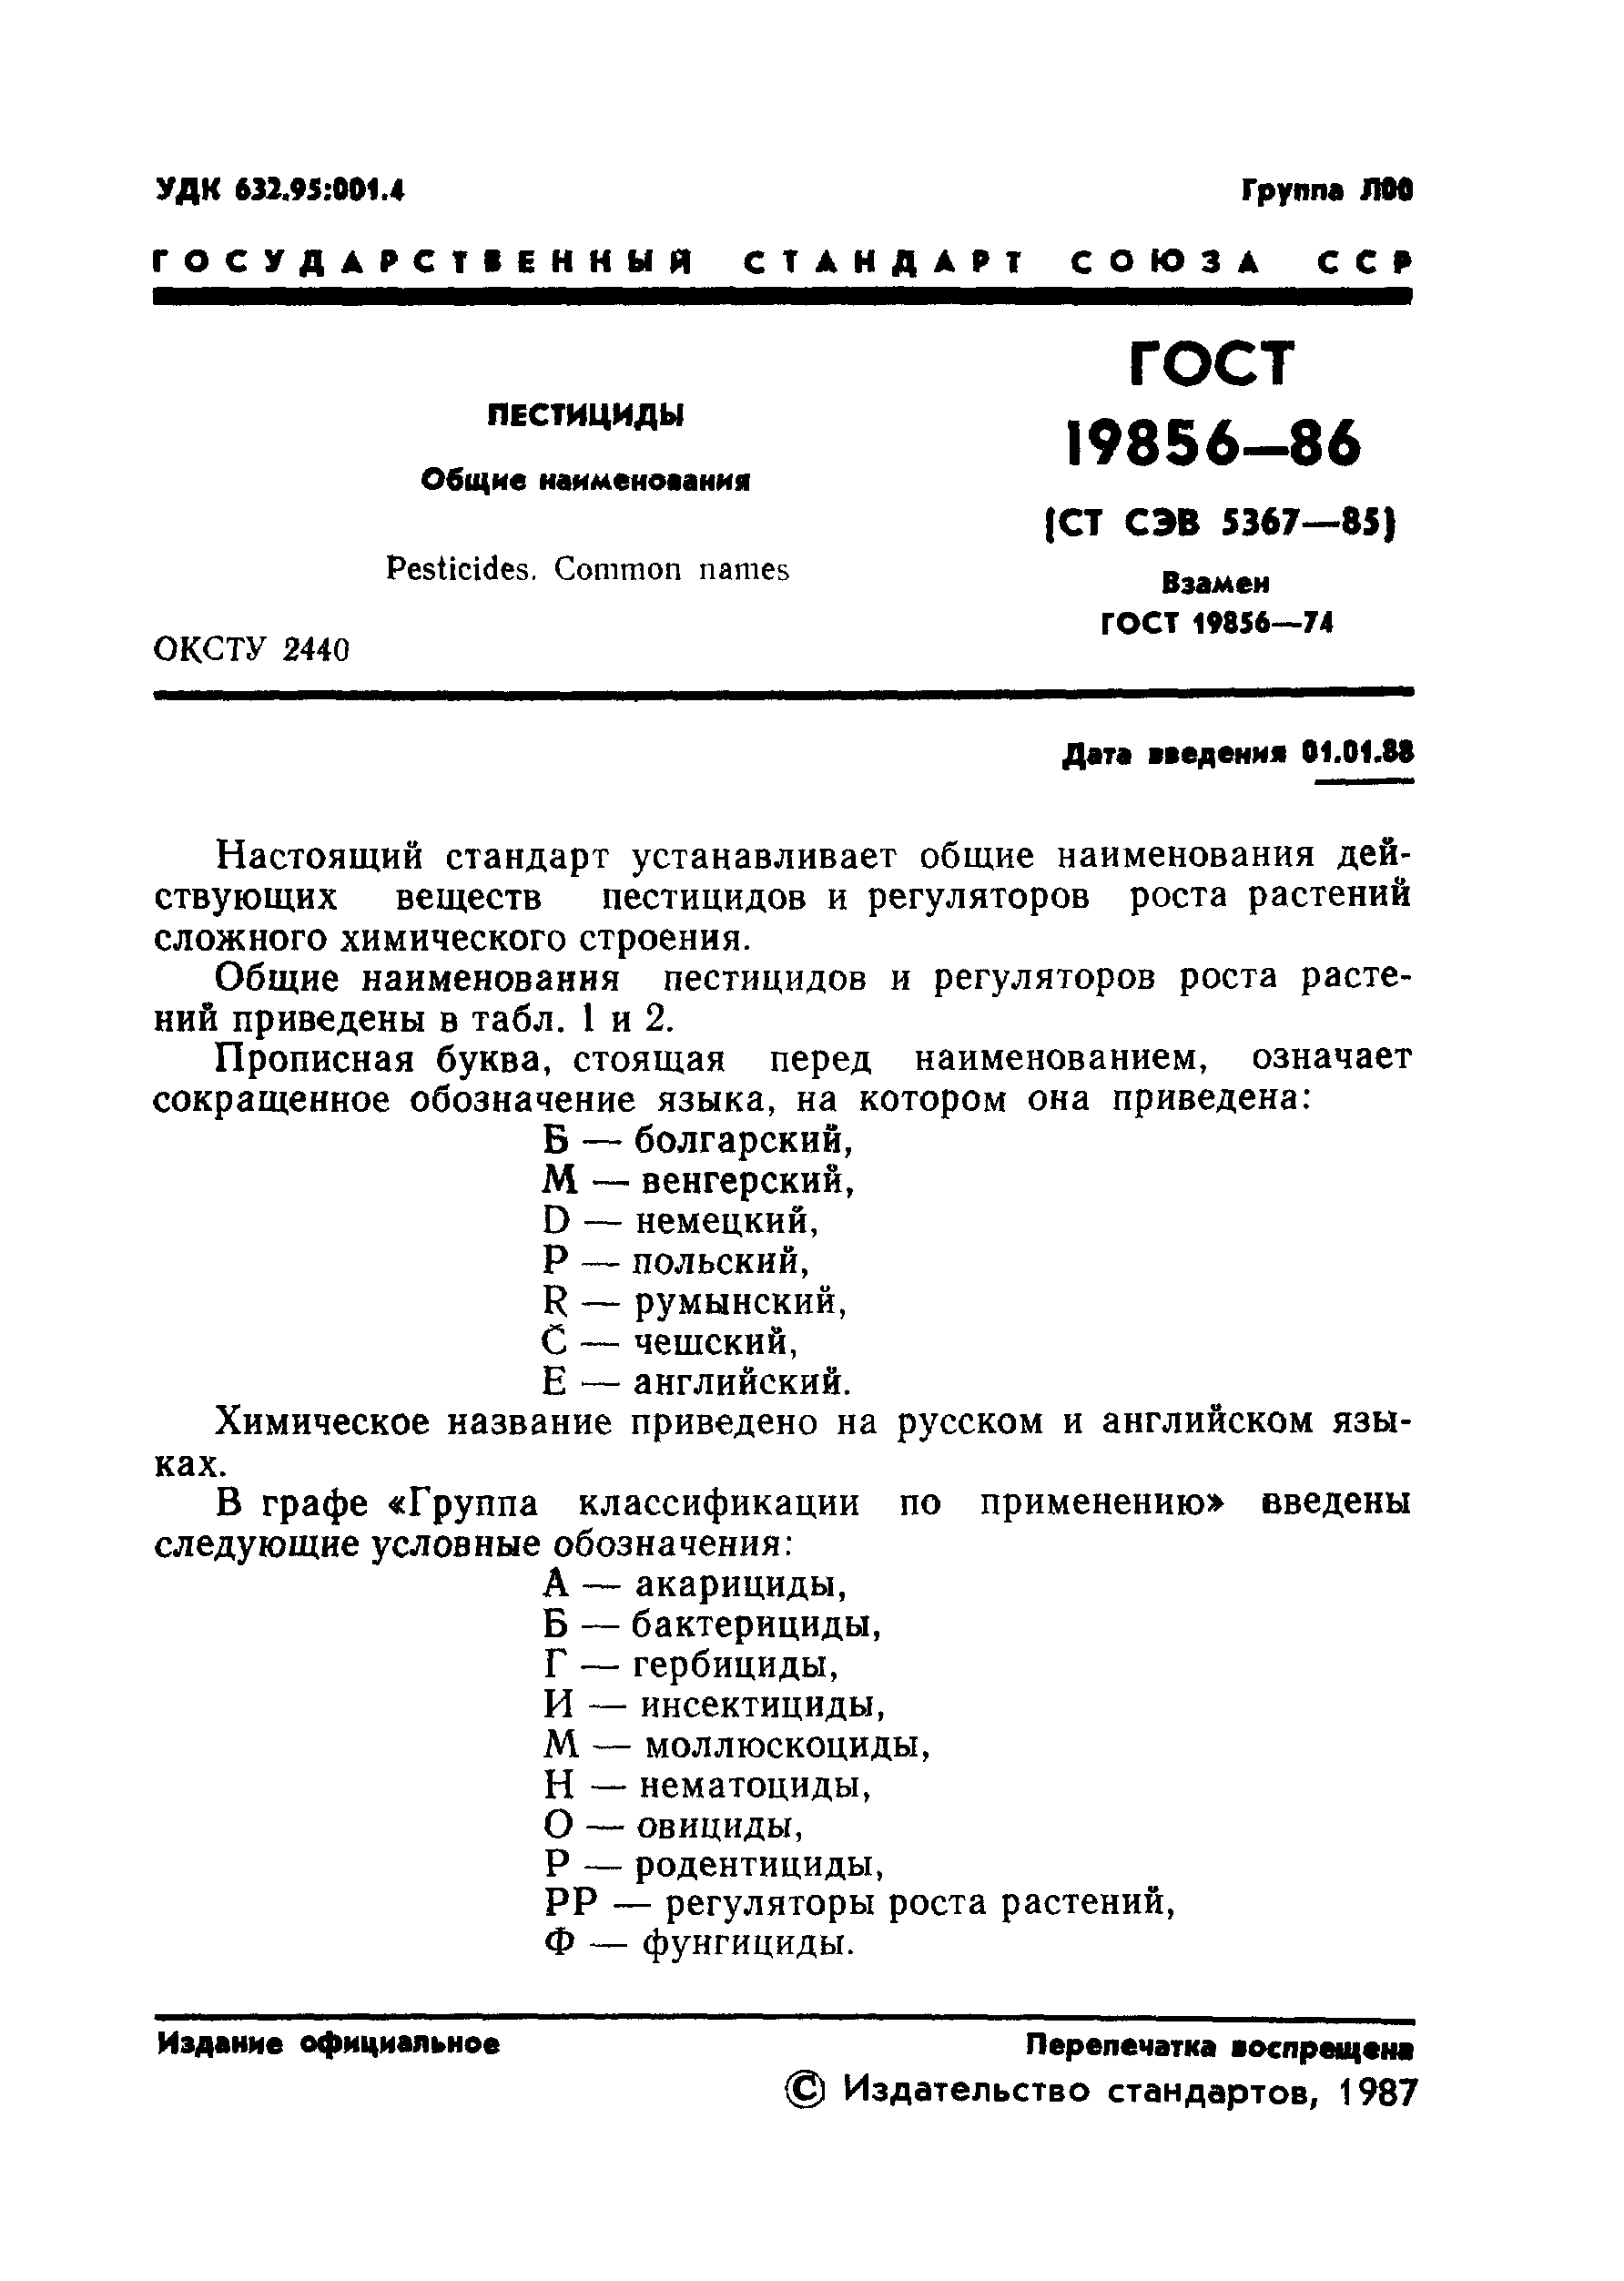 ГОСТ 19856-86